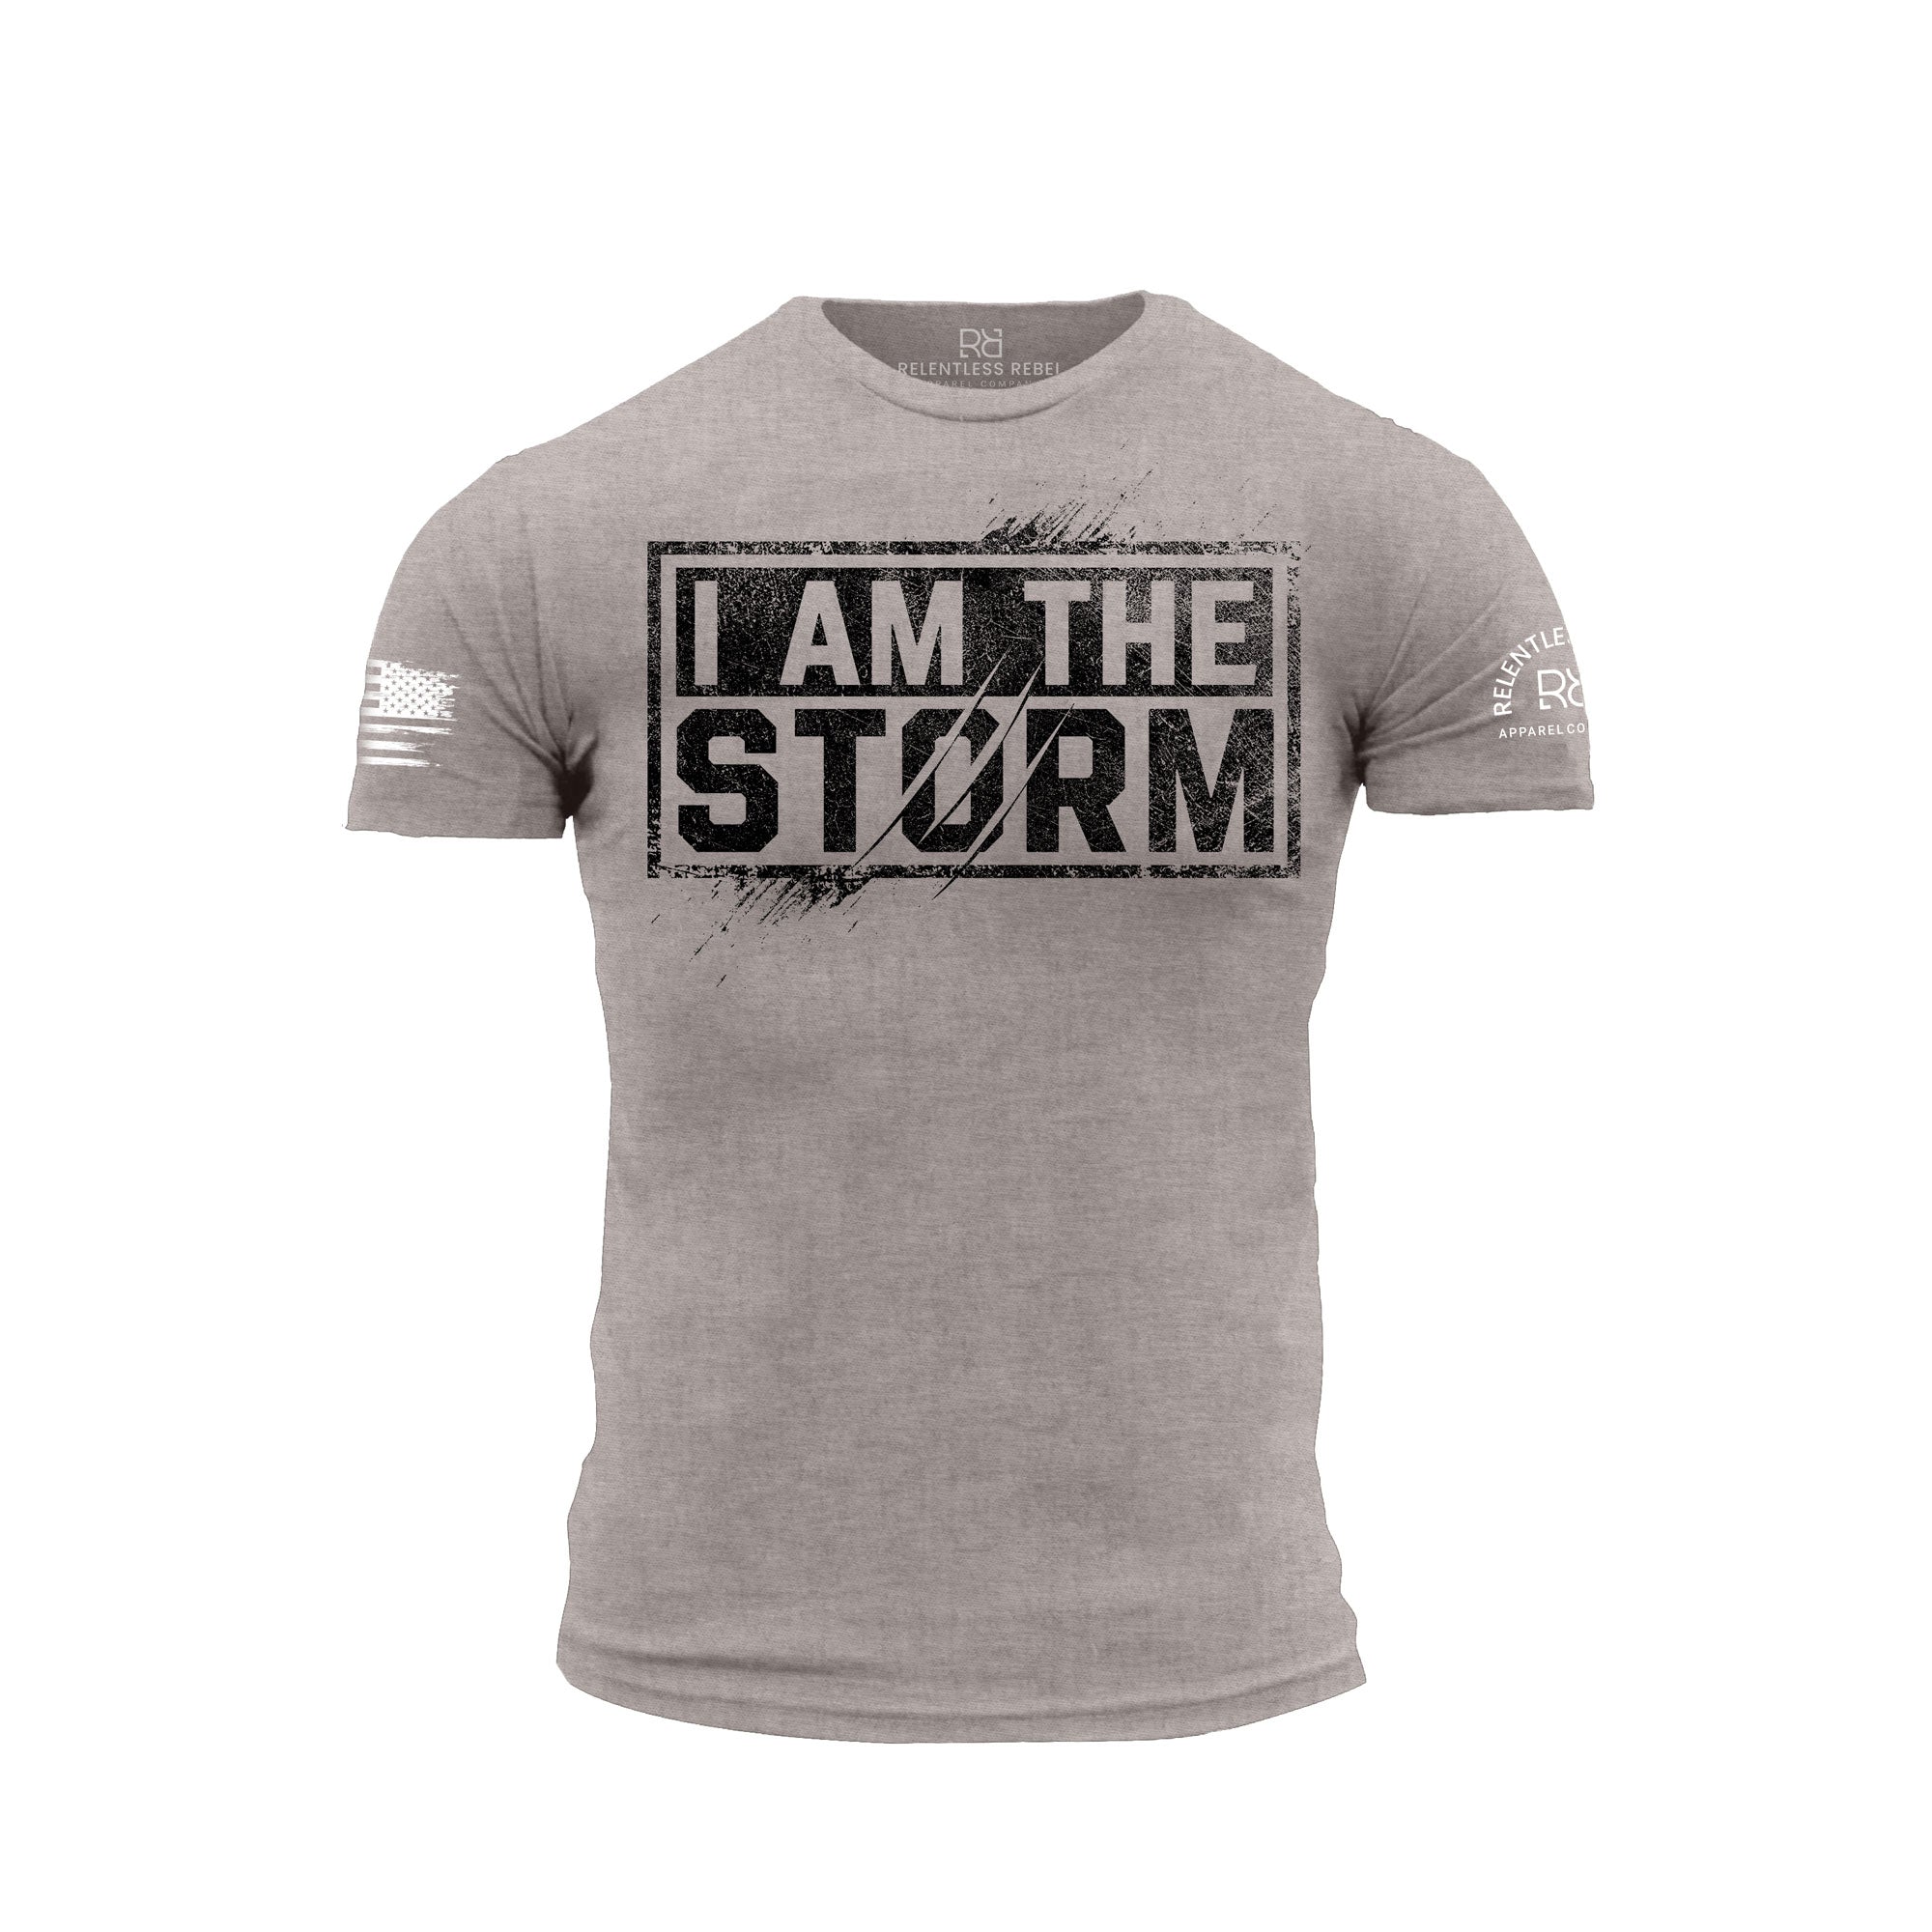 I Am The Storm front design t-shirt